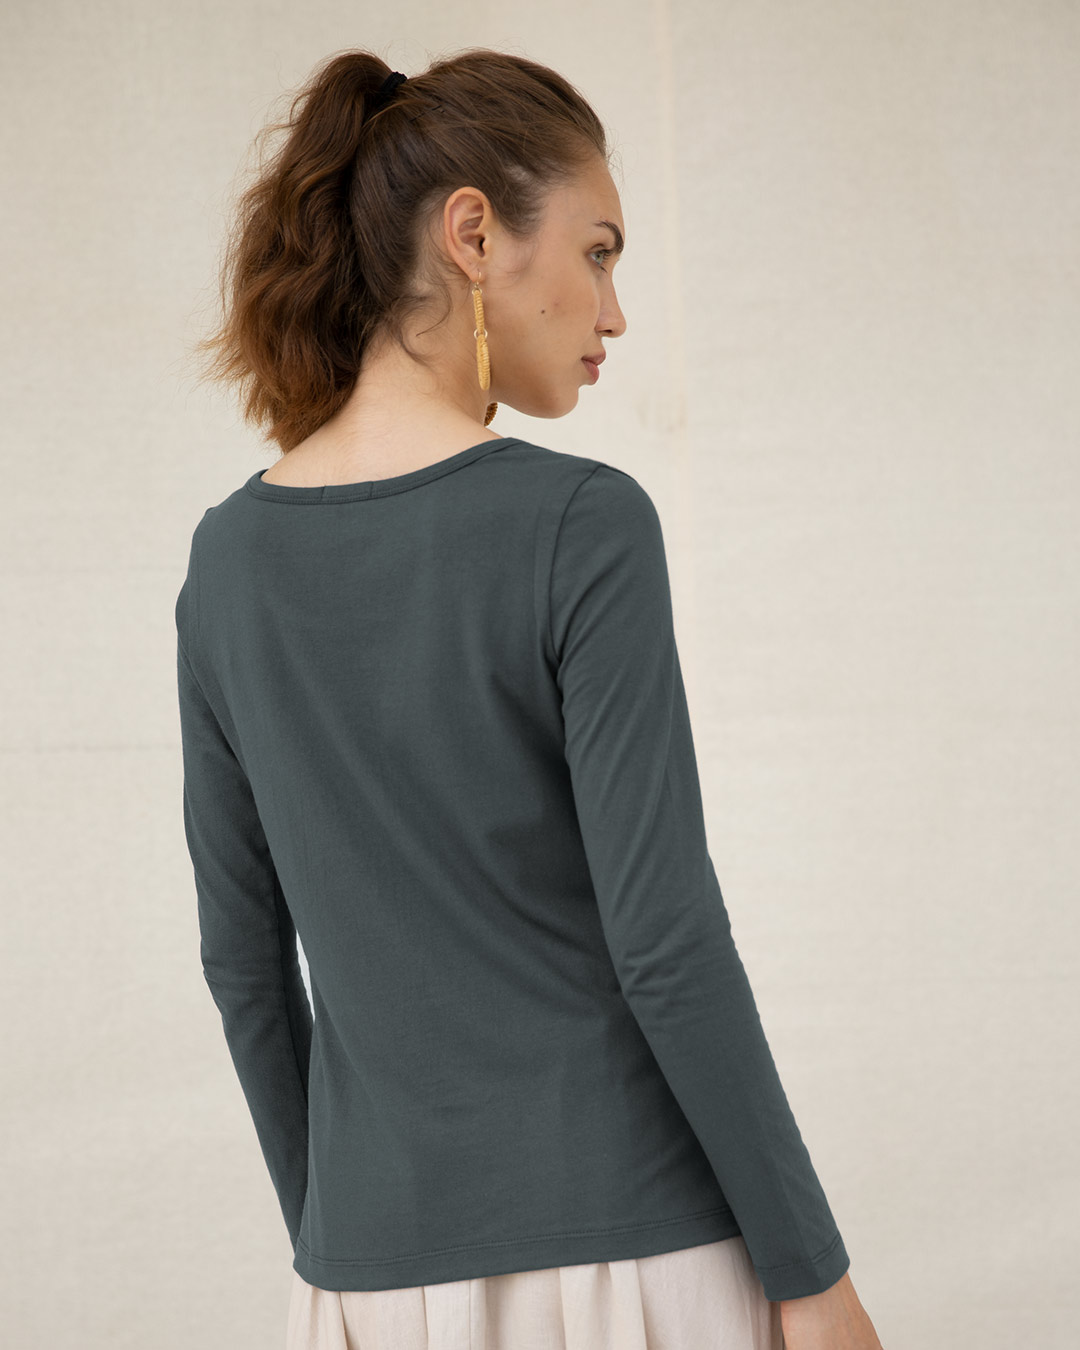 Shop Make Peace Tricolor Scoop Neck Full Sleeve T-Shirt-Back